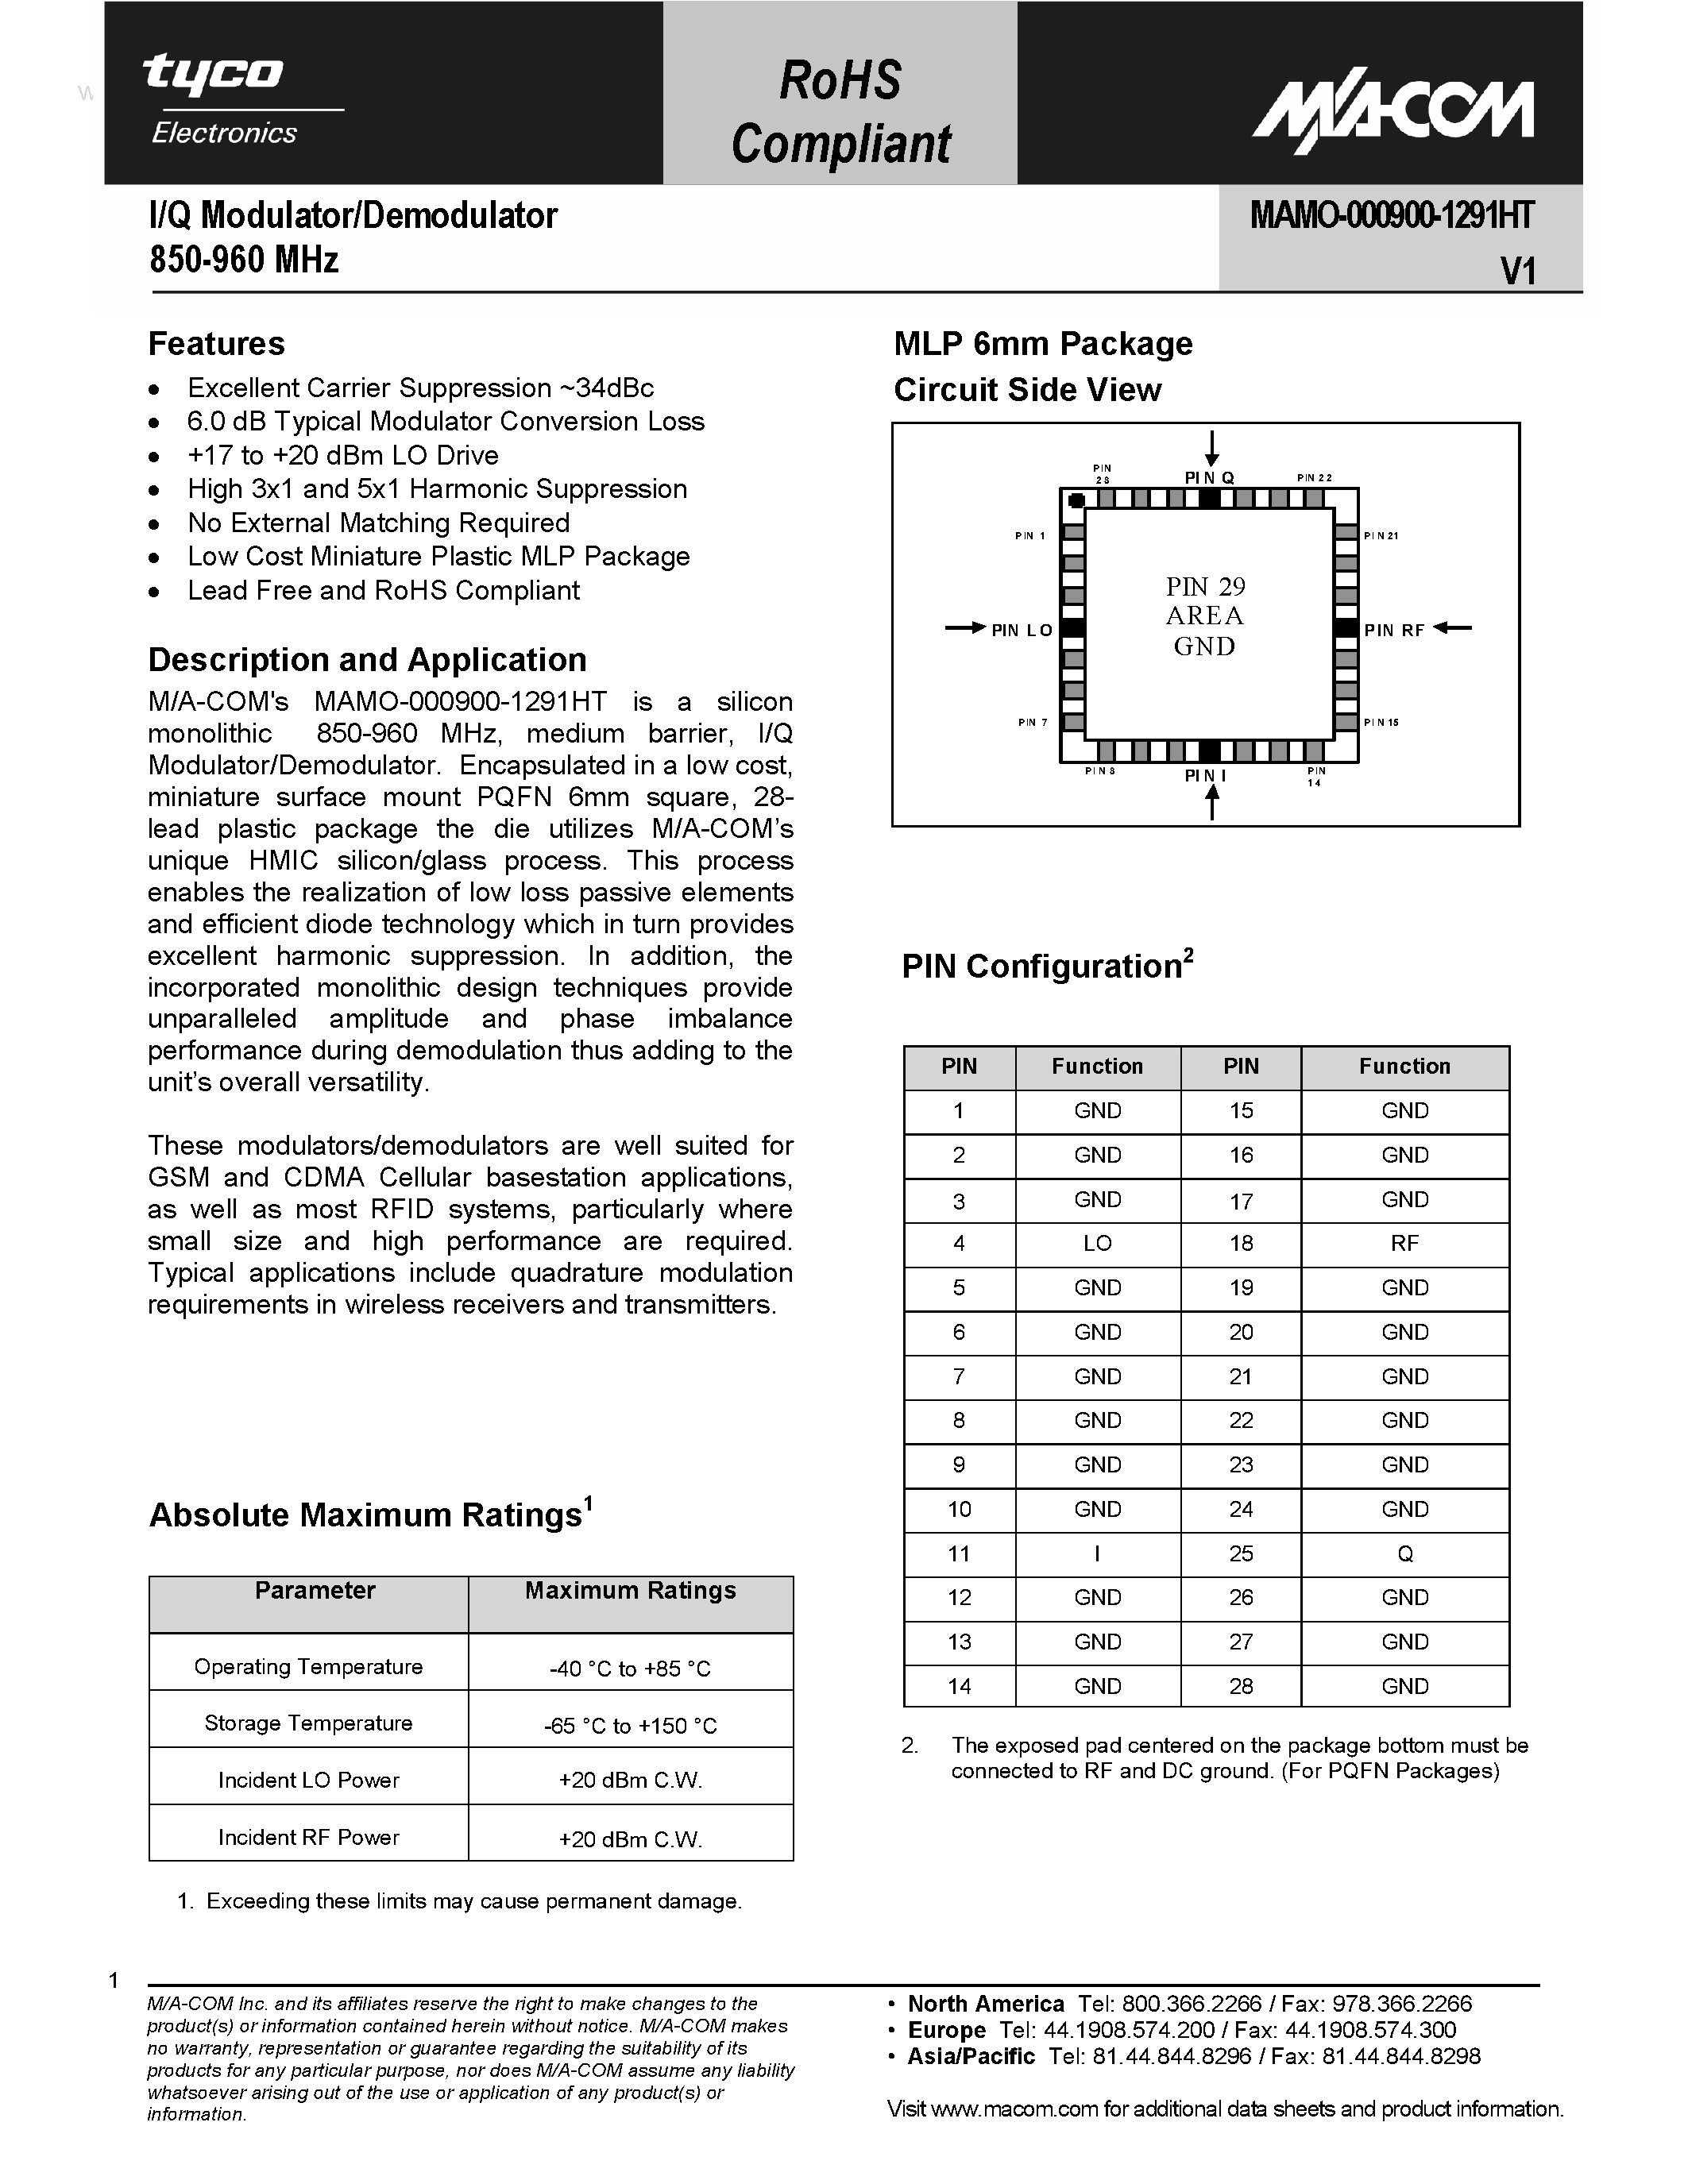 Datasheet MAMO-000900-1291HT - I/Q Modulator/Demodulator page 1